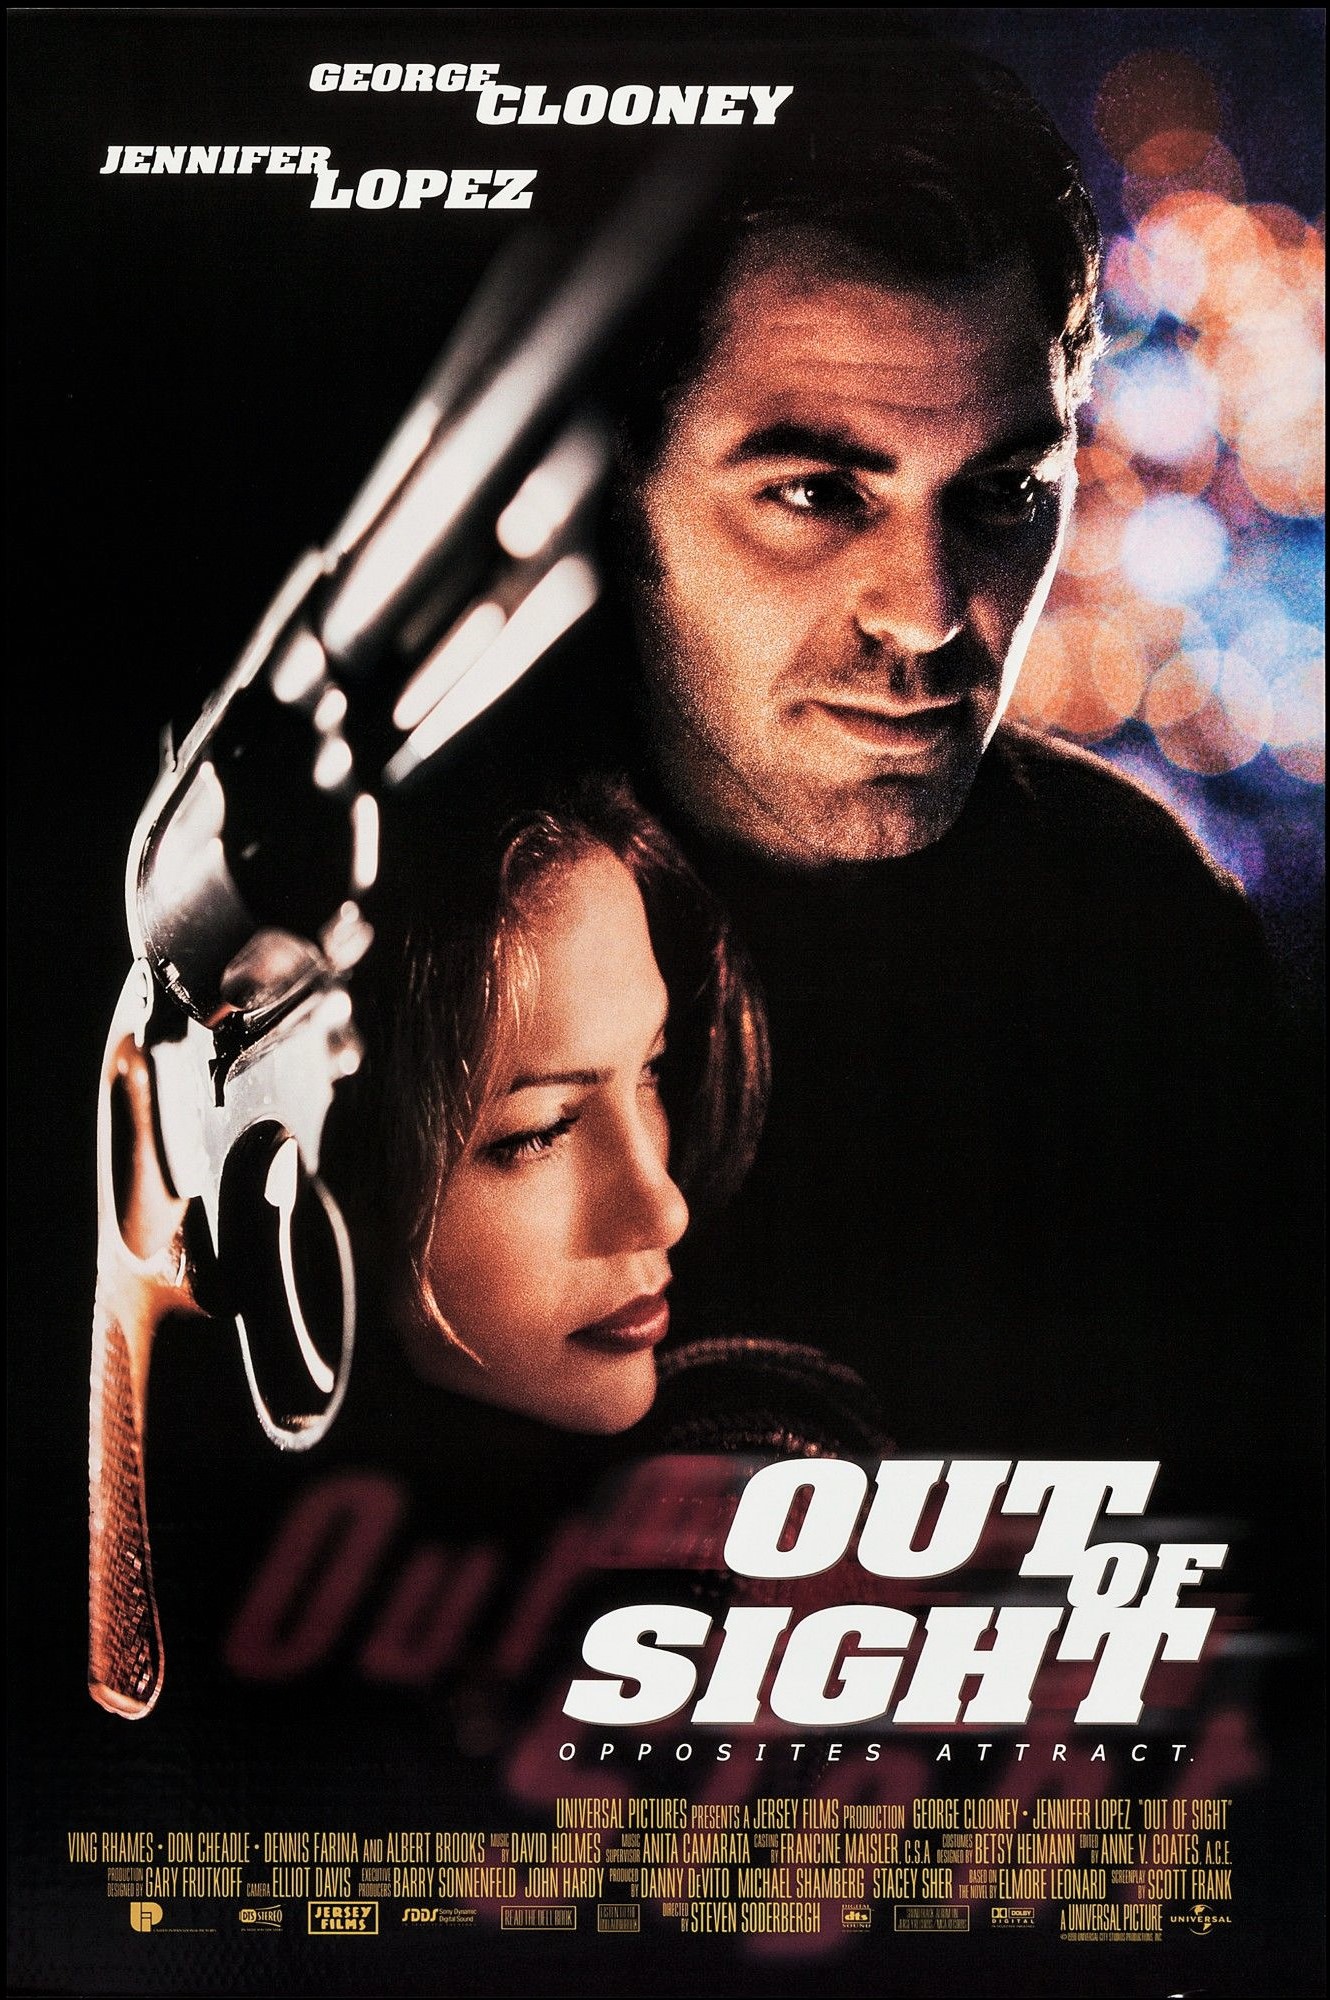 Jennifer Lopez Movies - Out of Sight (1998)